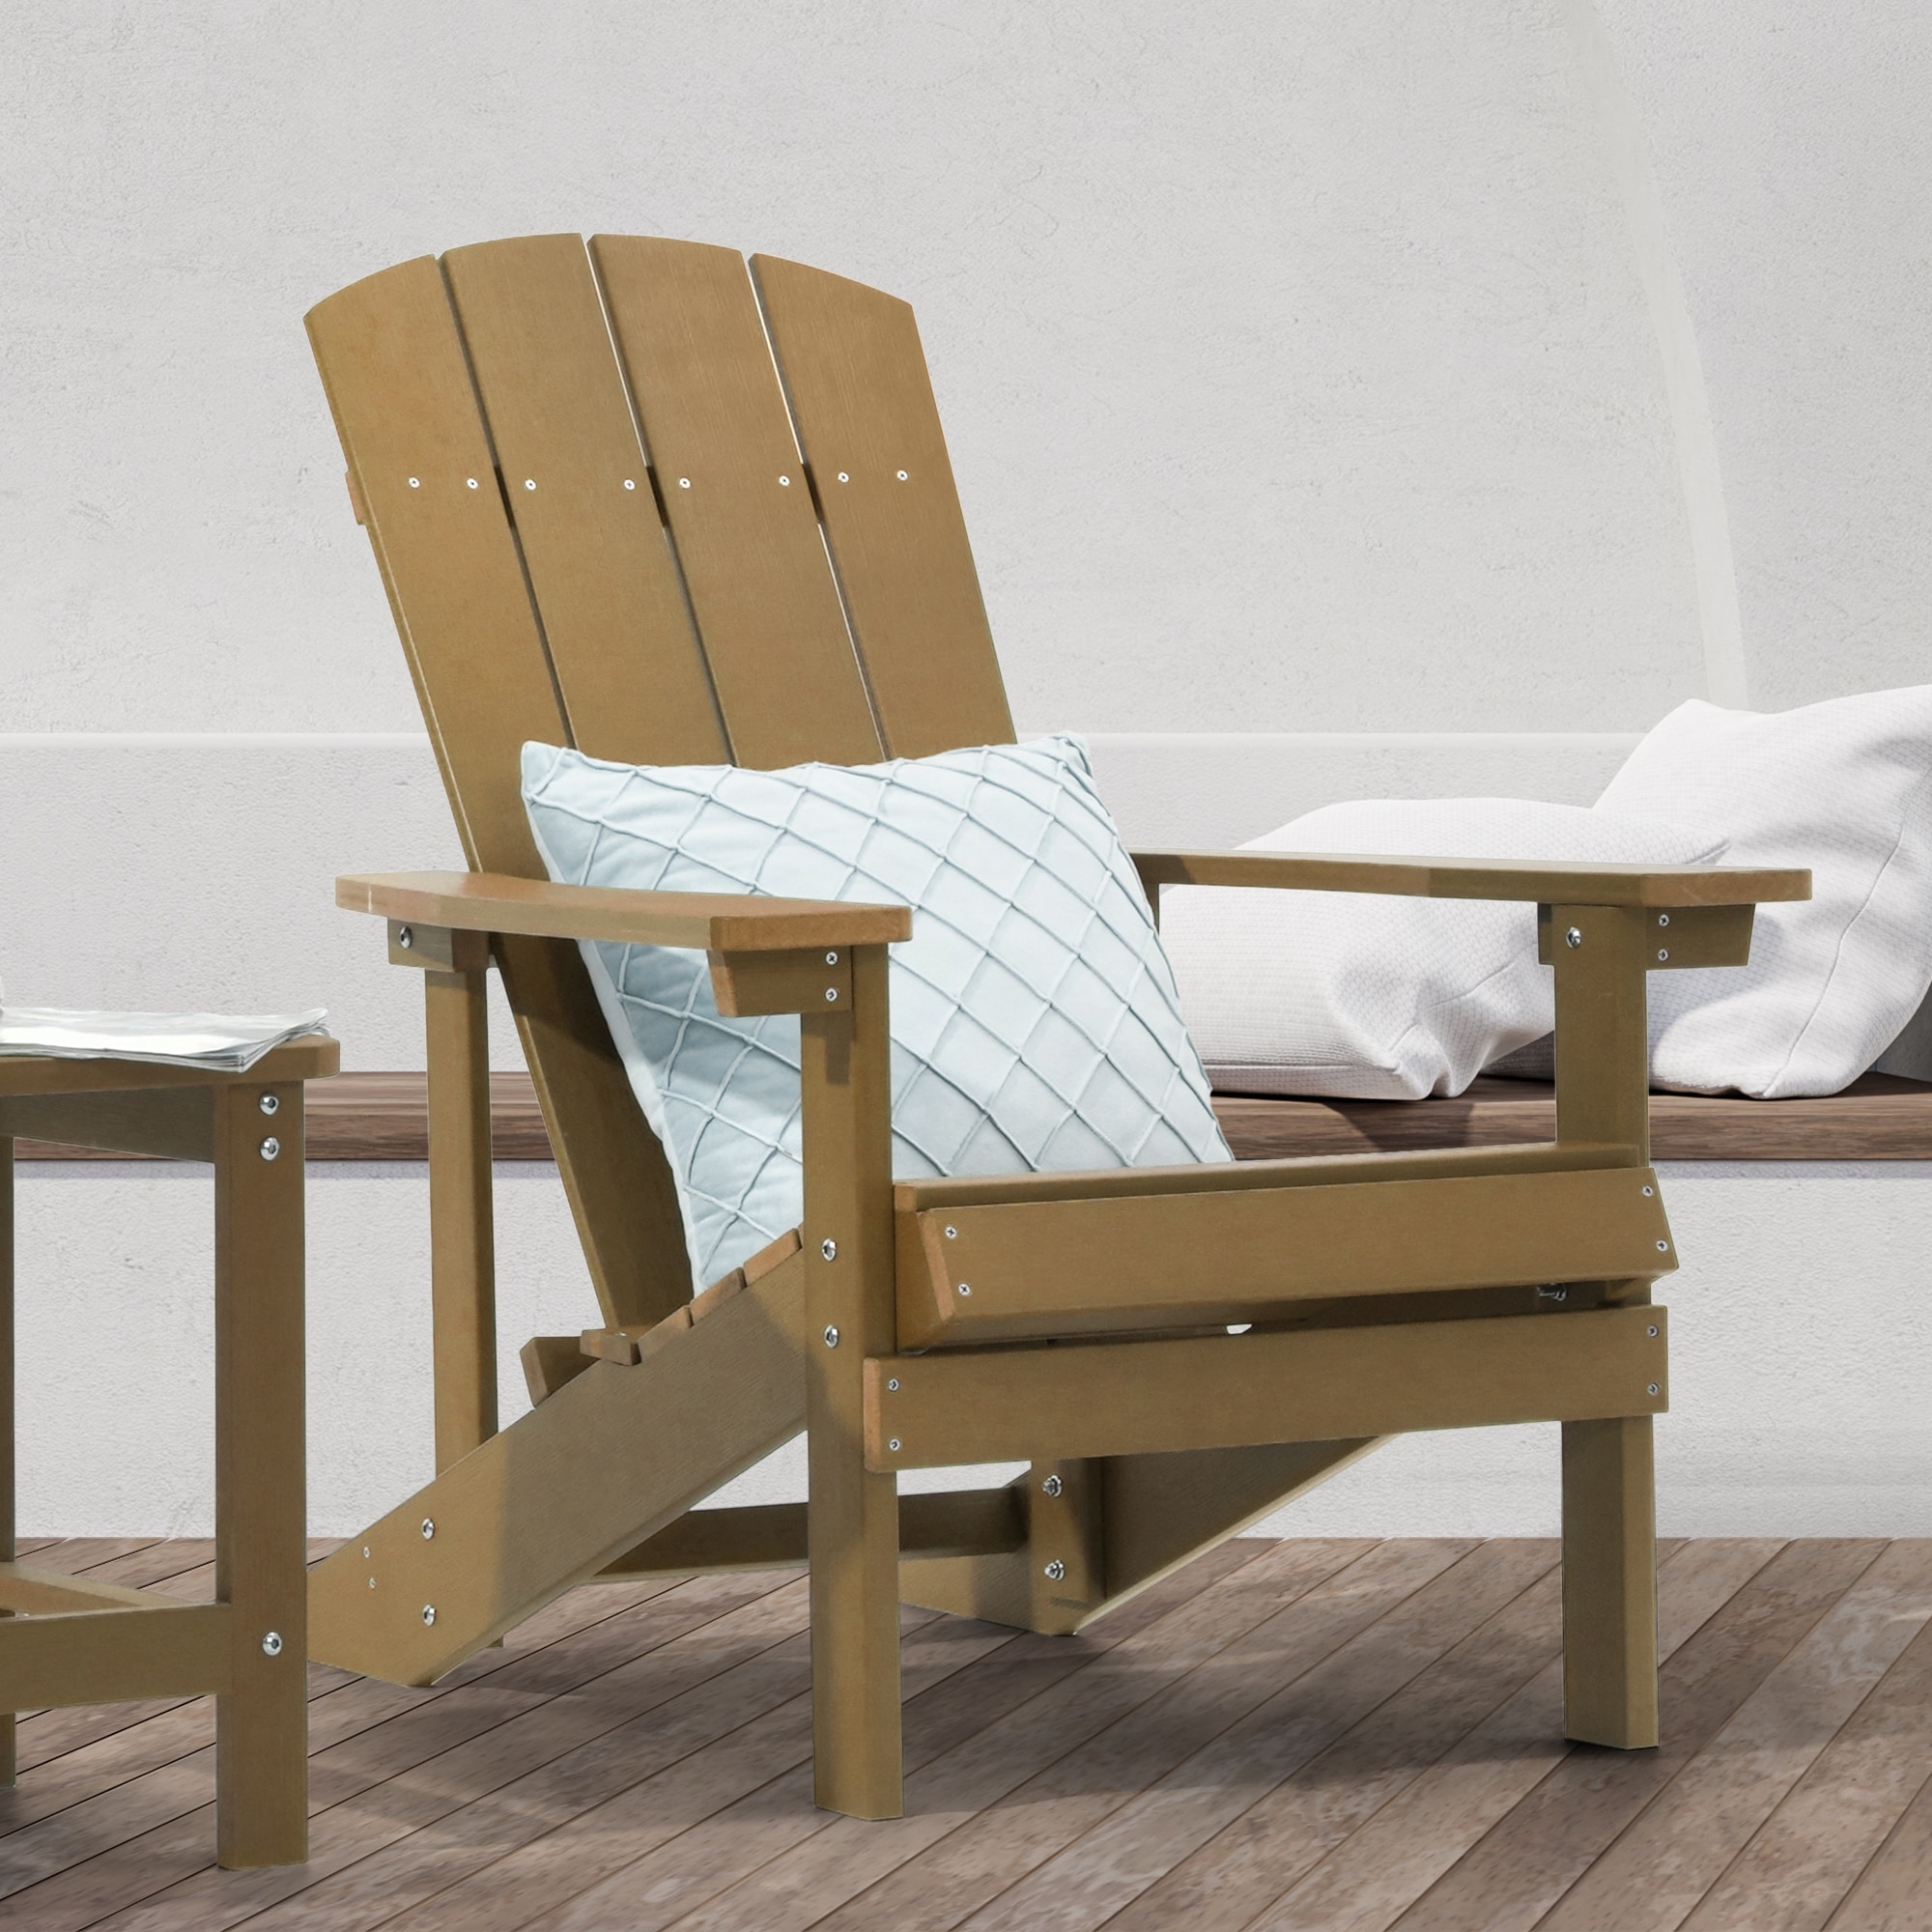 Bonosuki Outdoor Hips Weather-resistant Plastic Adirondack Chairs